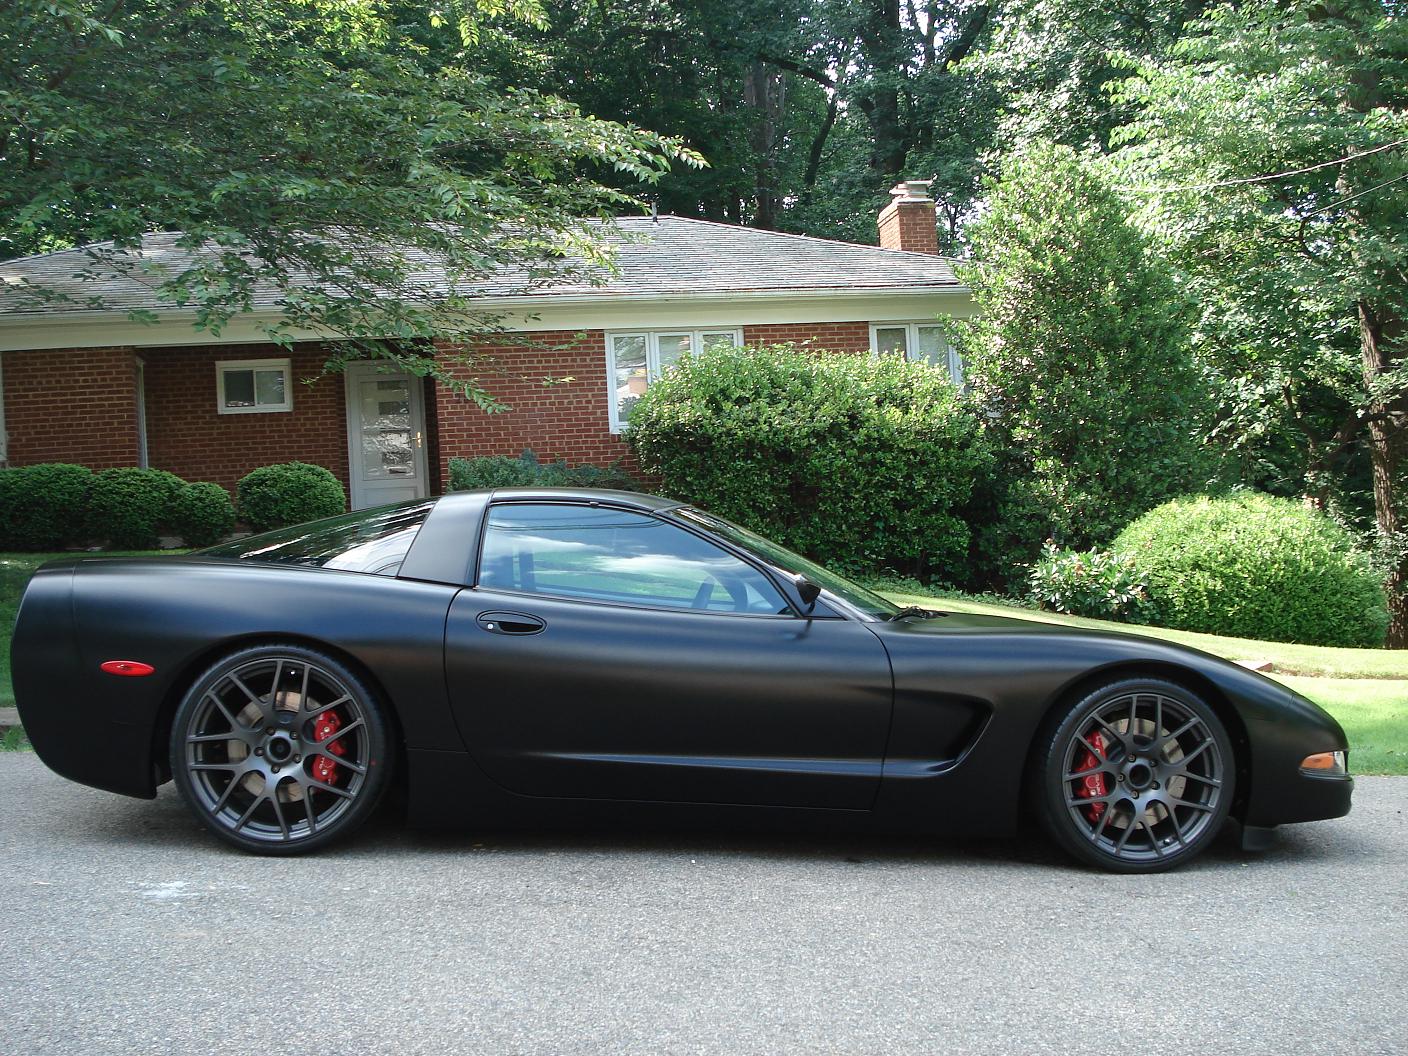 2005 C6 Corvette Pictures & Images.